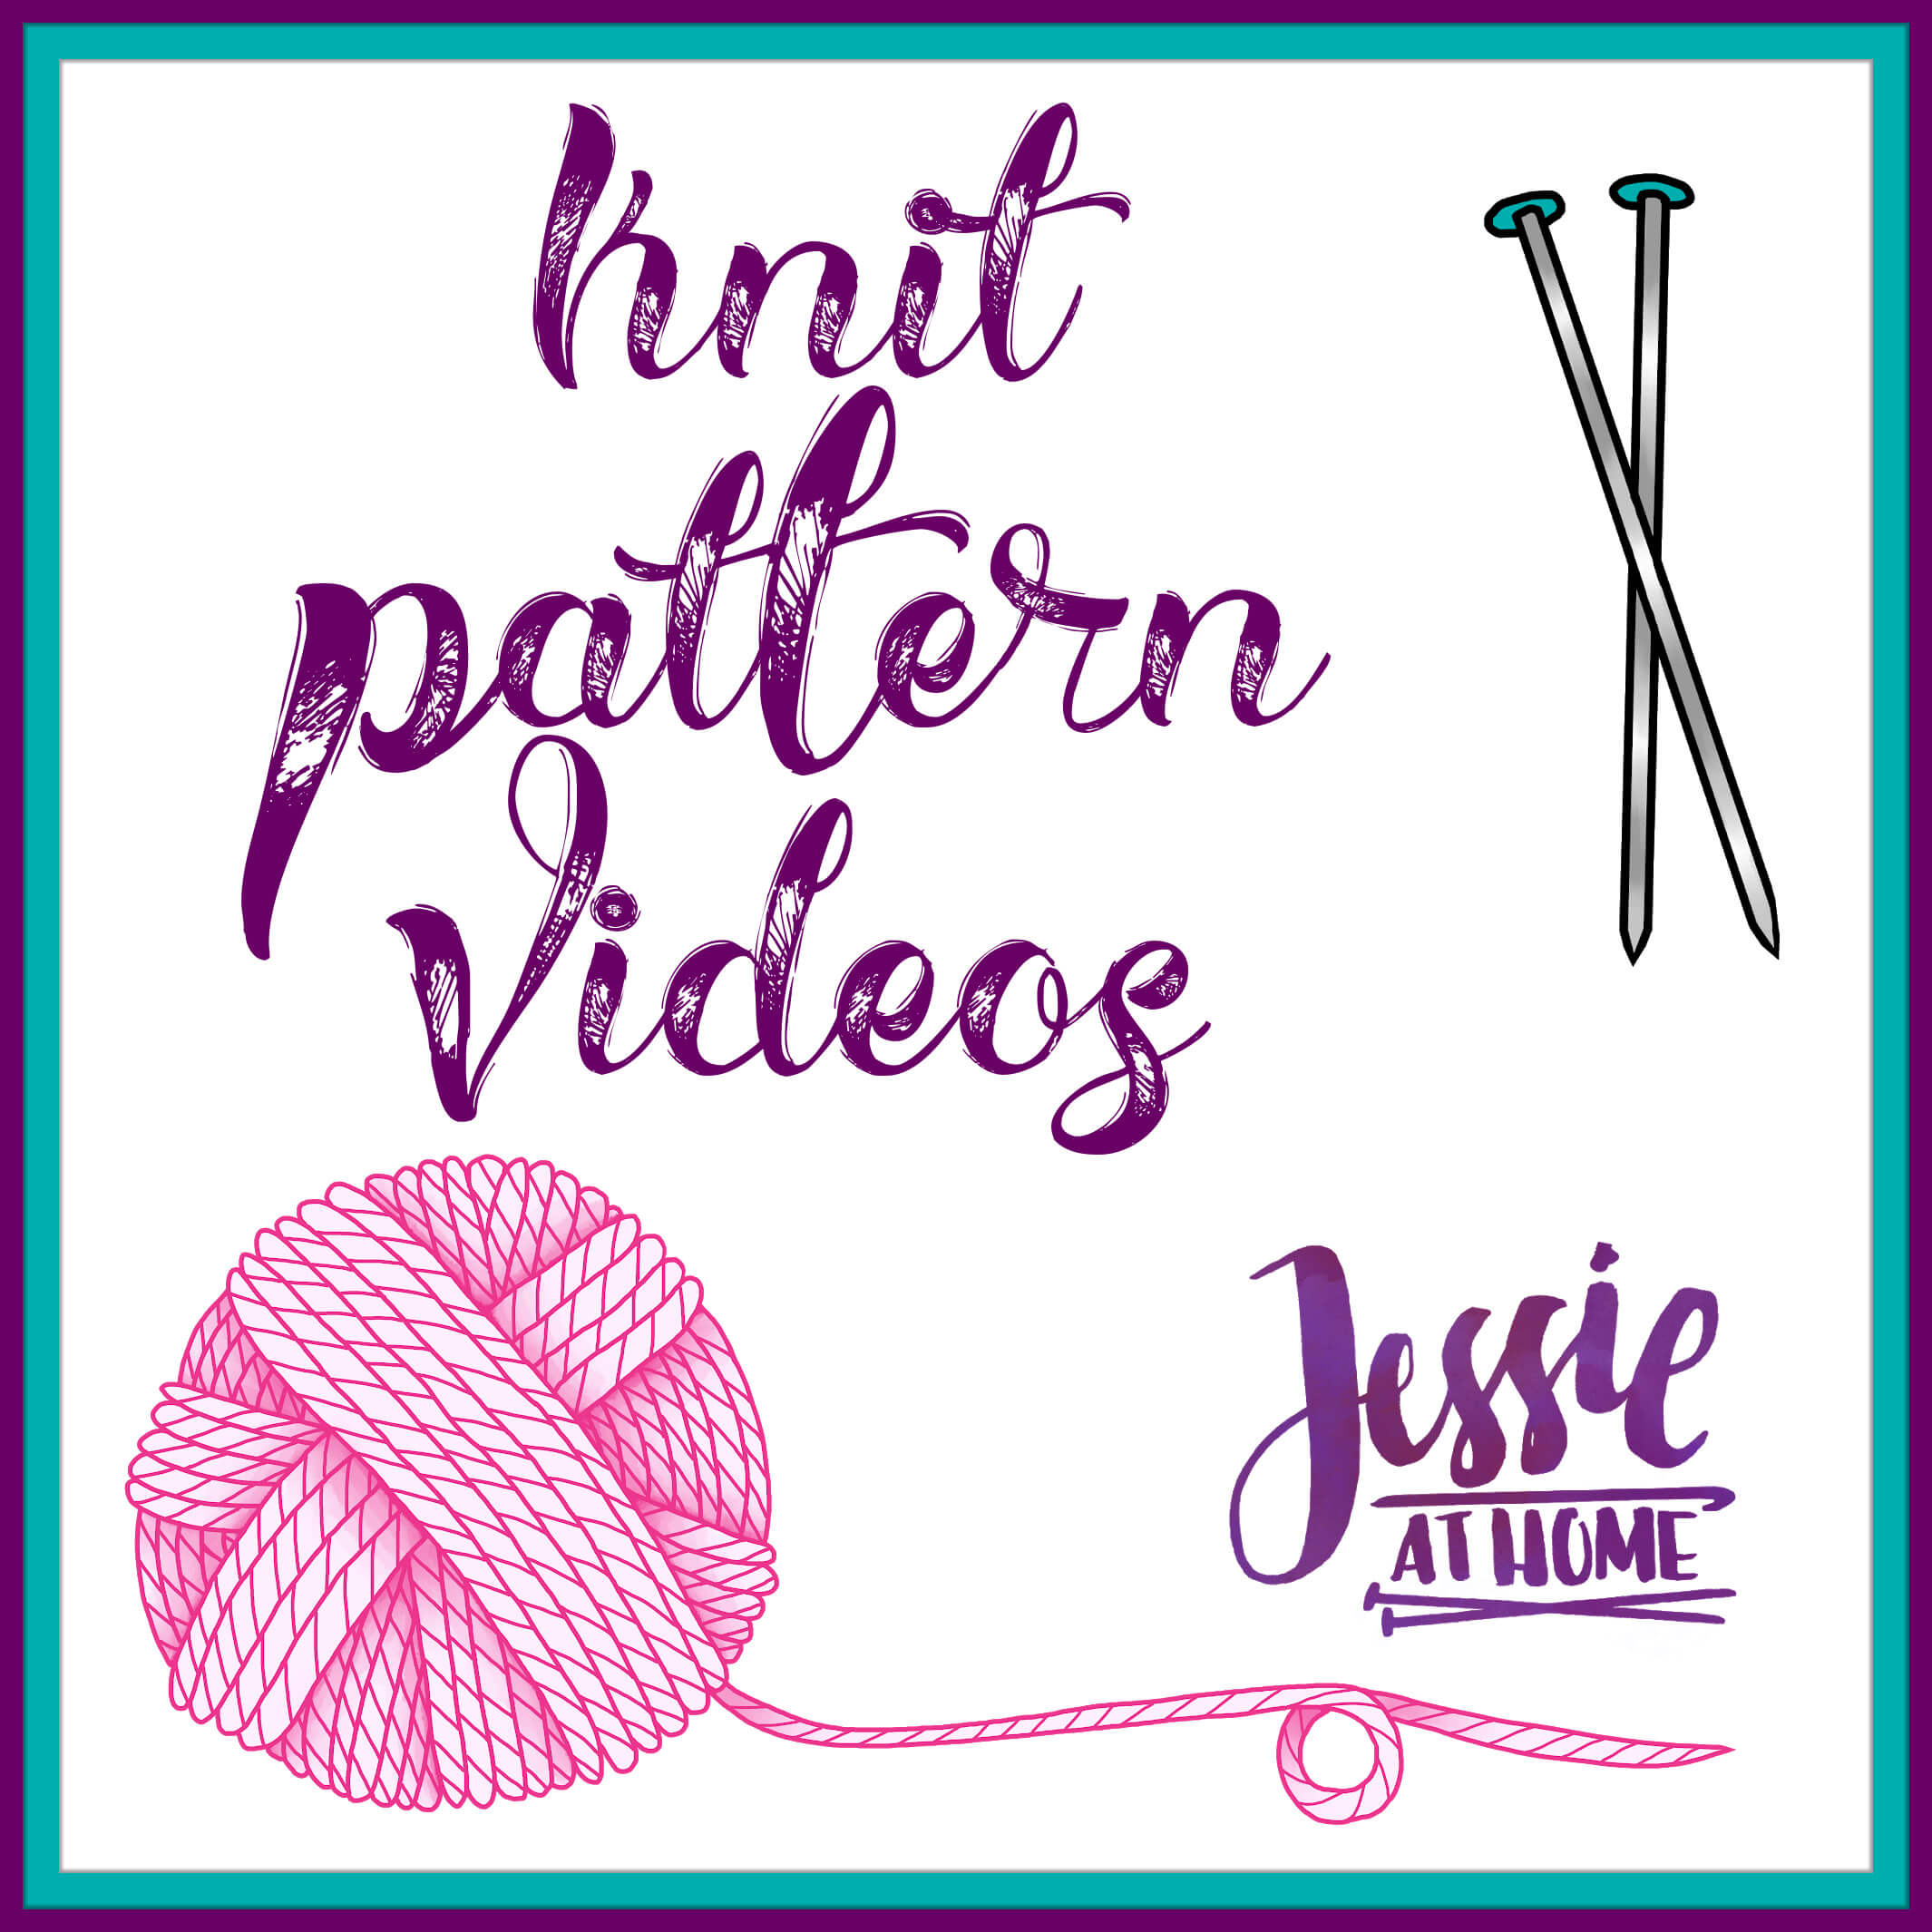 Knit Pattern Videos Menu on Jessie At Home